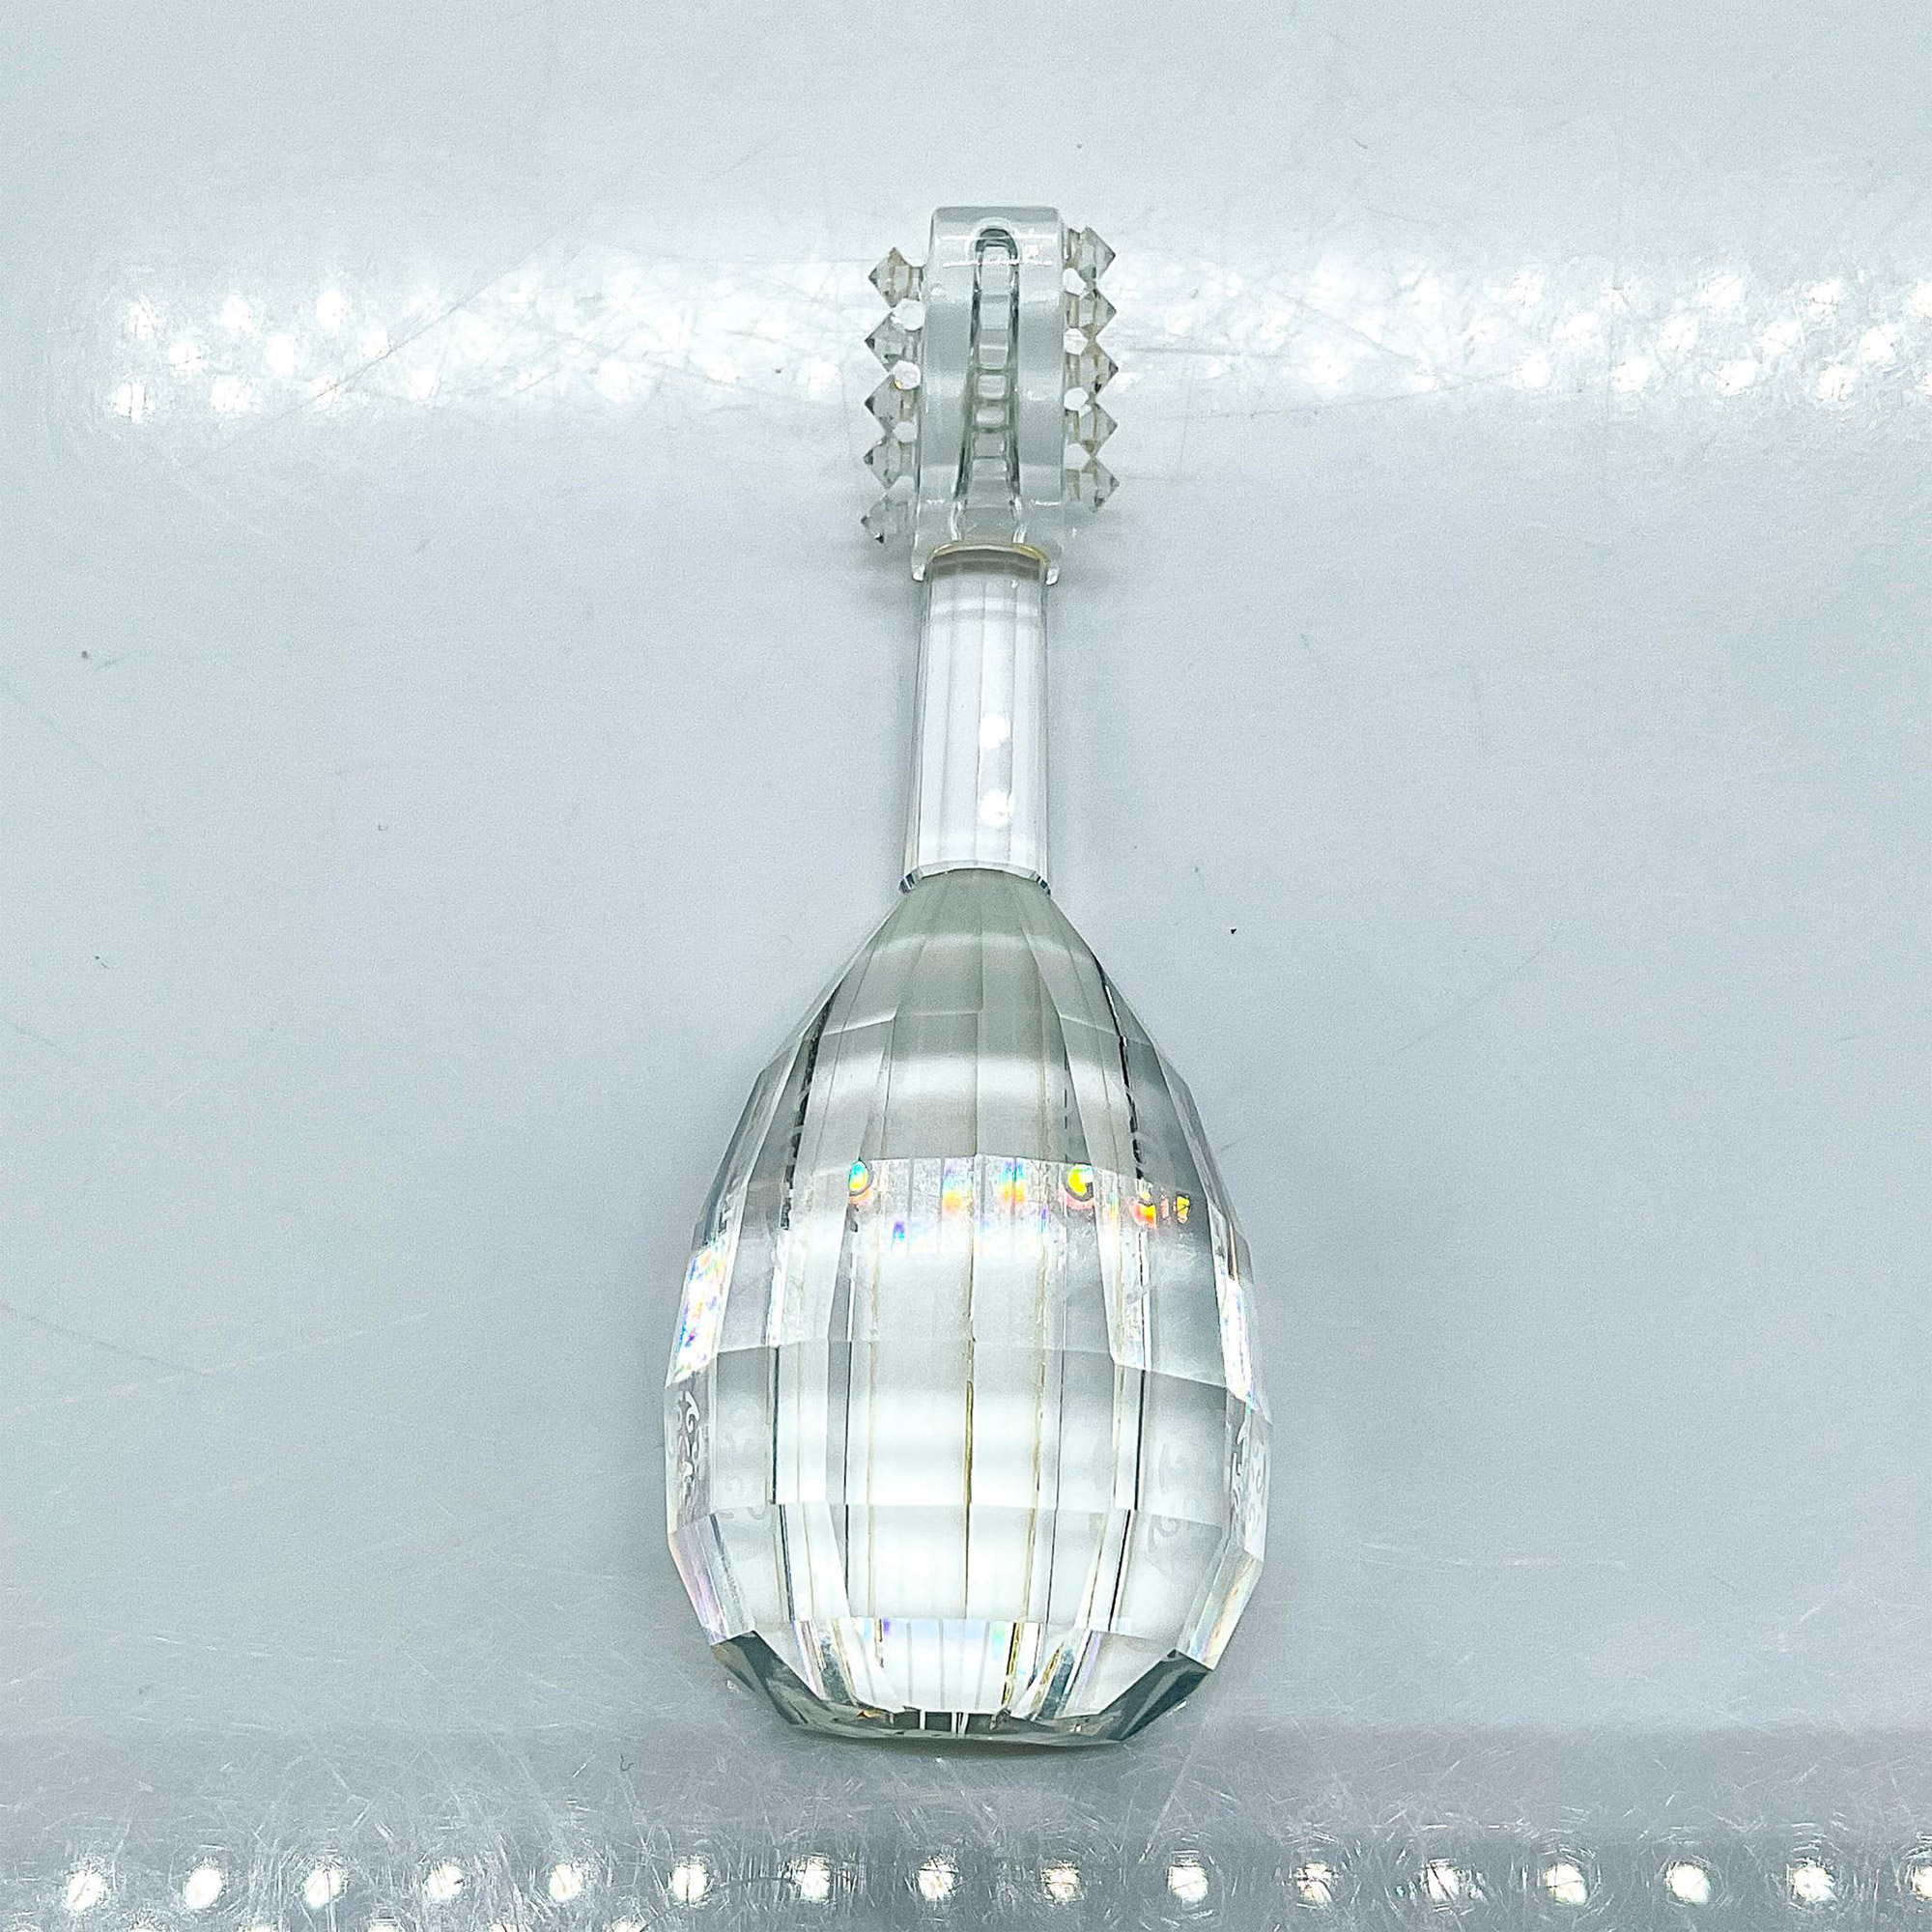 Swarovski Sliver Crystal Figurine, Lute - Image 3 of 4